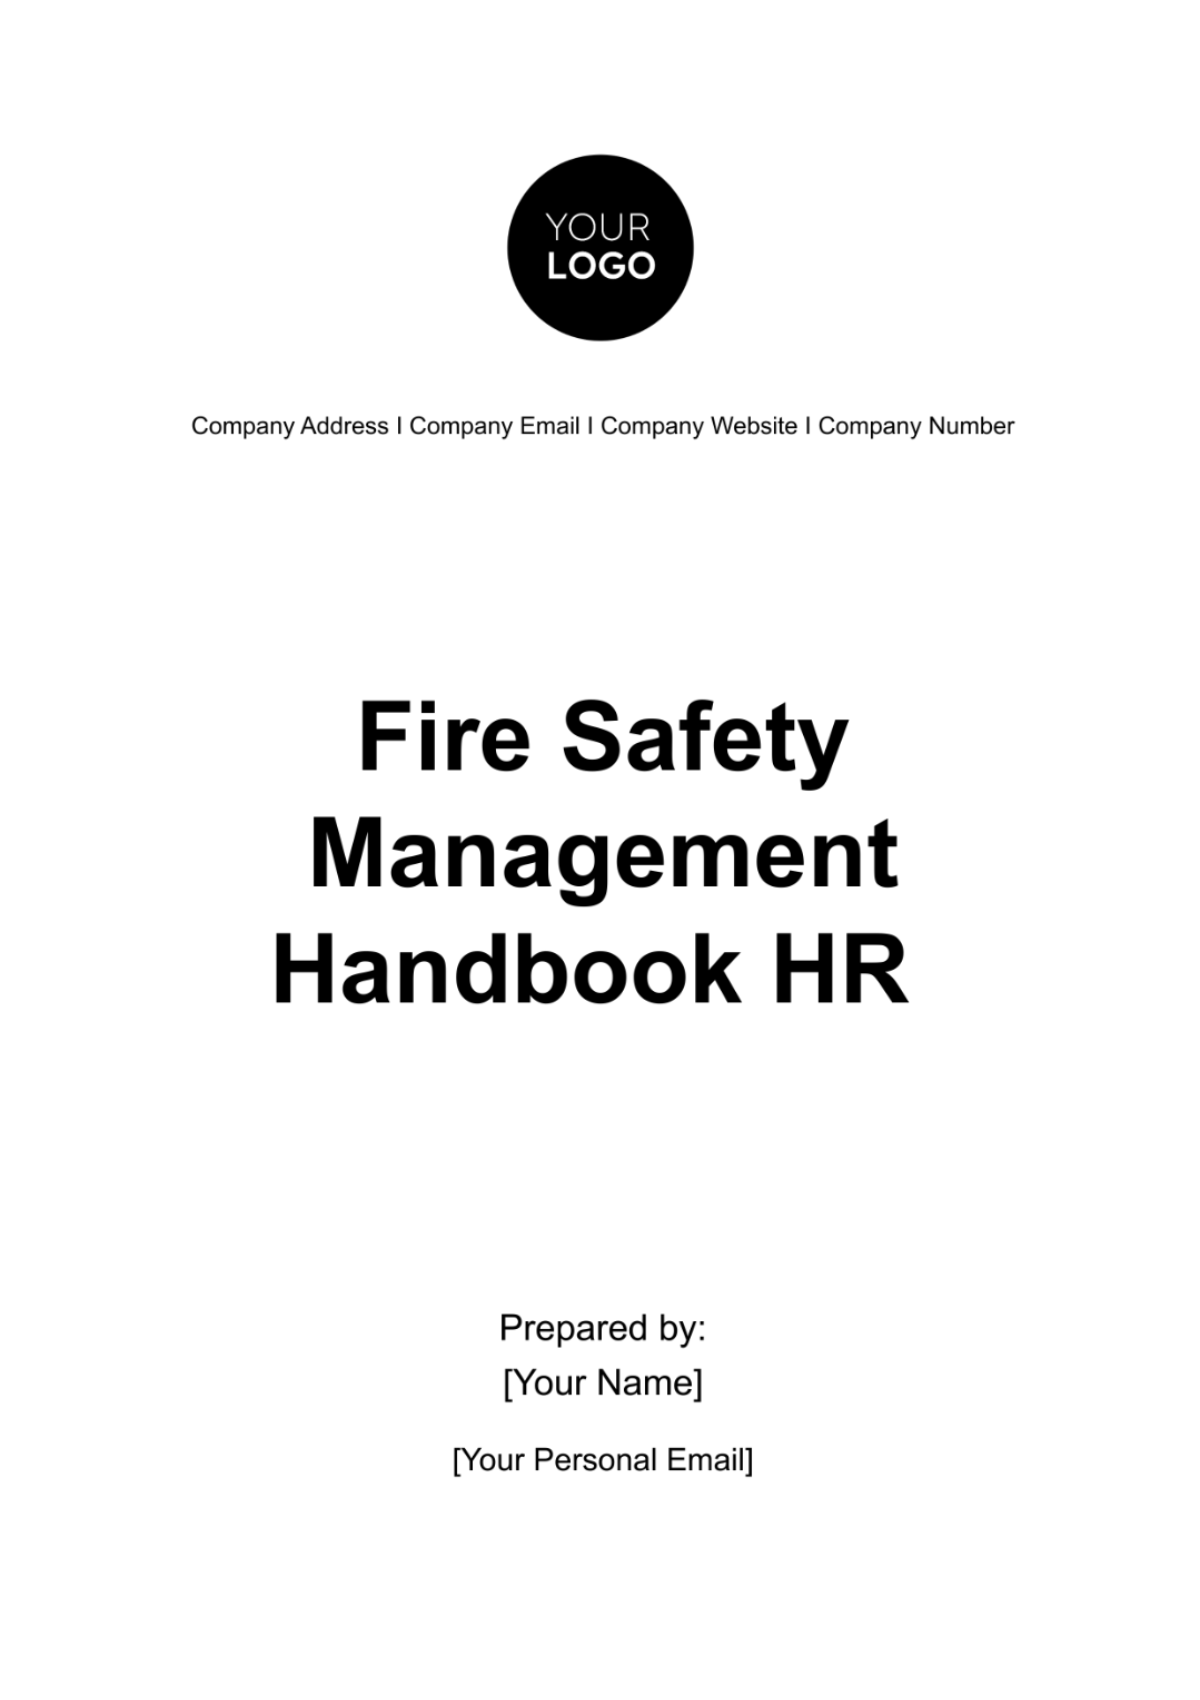 Fire Safety Management Handbook HR Template